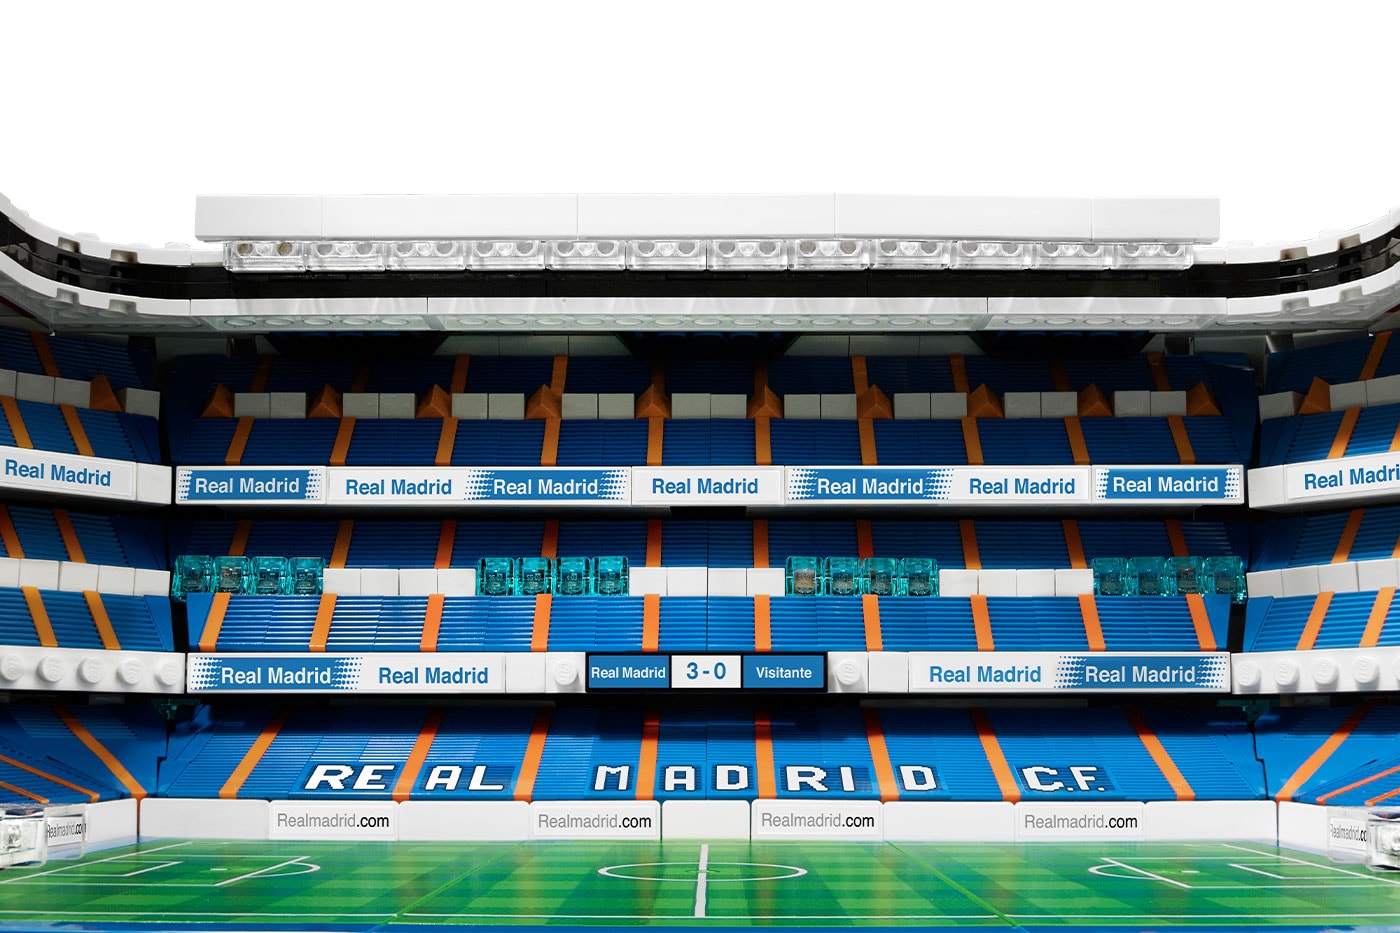 LEGO Releases a Faithful Replica of Real Madrid's Santiago Bernabéu Stadium  model building blcok real madrid c.f. football futbol soccer courtois lunin carvajal 